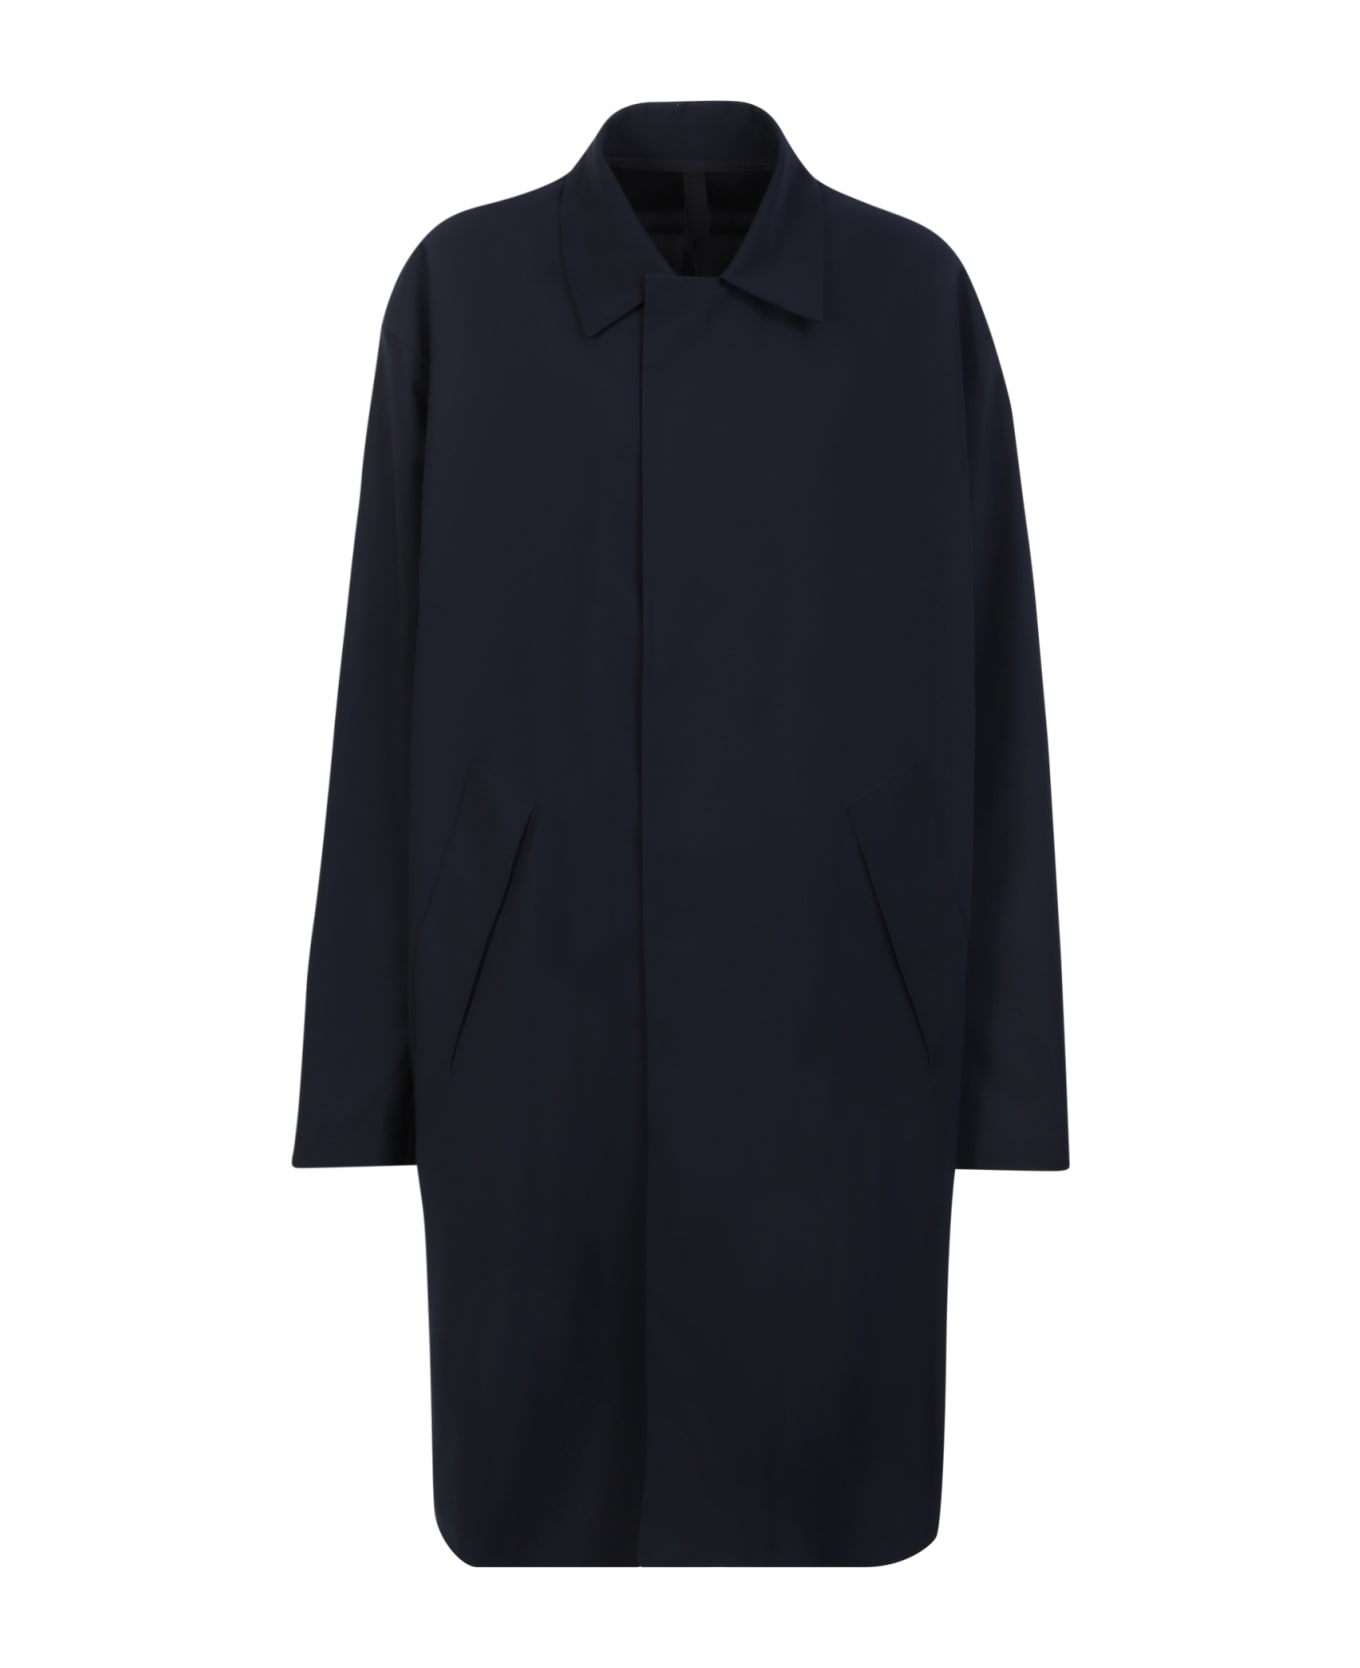 Harris Wharf London Three-quarter Sleeves Black Coat - Blue